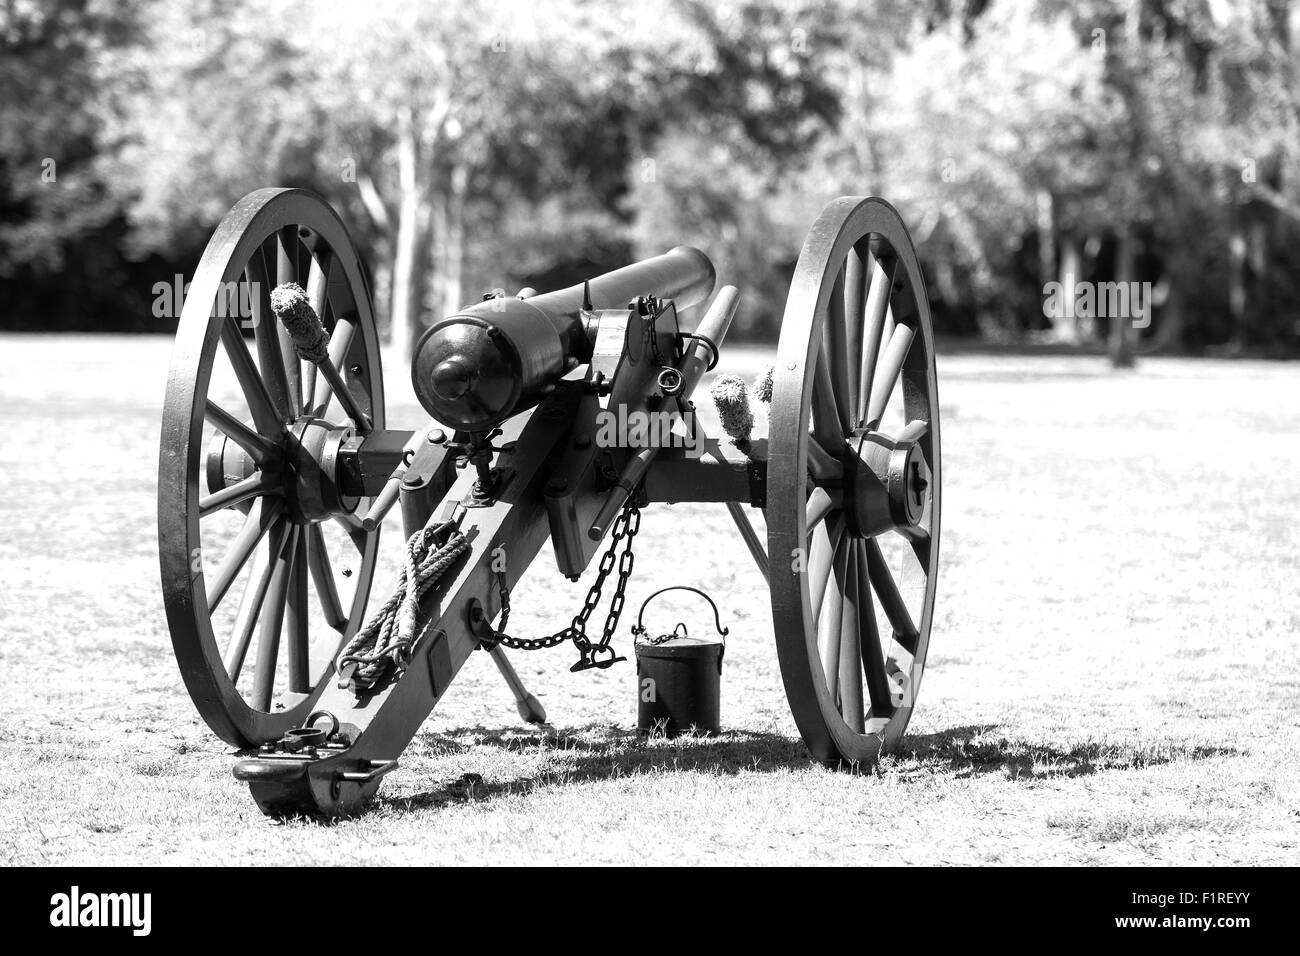 A black and white image of a Civil War era cannon. Stock Photo